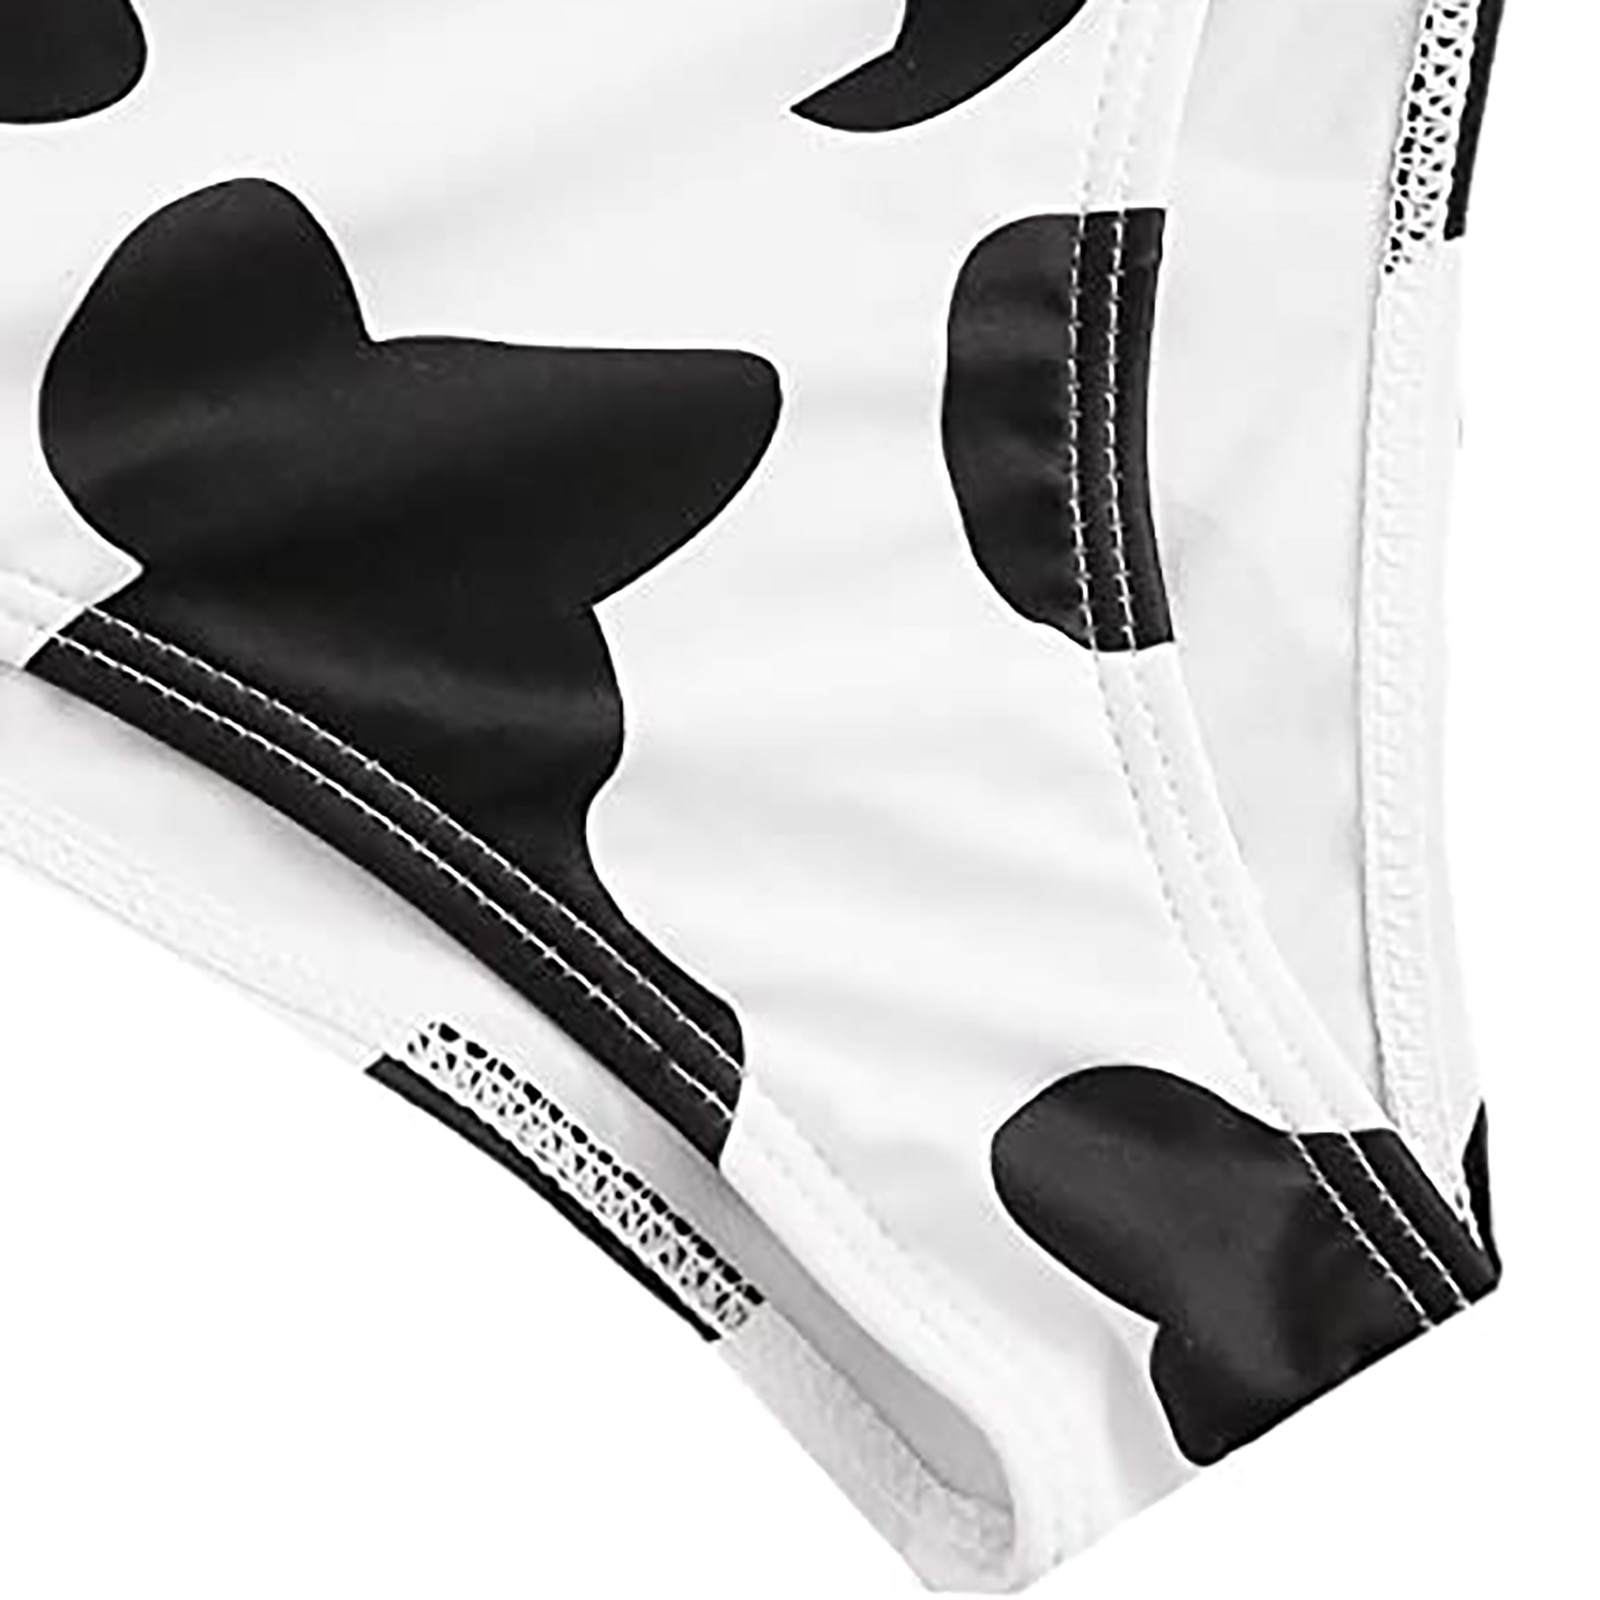 Two Piece Bandeau Bikini Sexy High Waist Swimsuit Female Swimwear Cow Print Mini Thong Push up 1 - The Cow Print